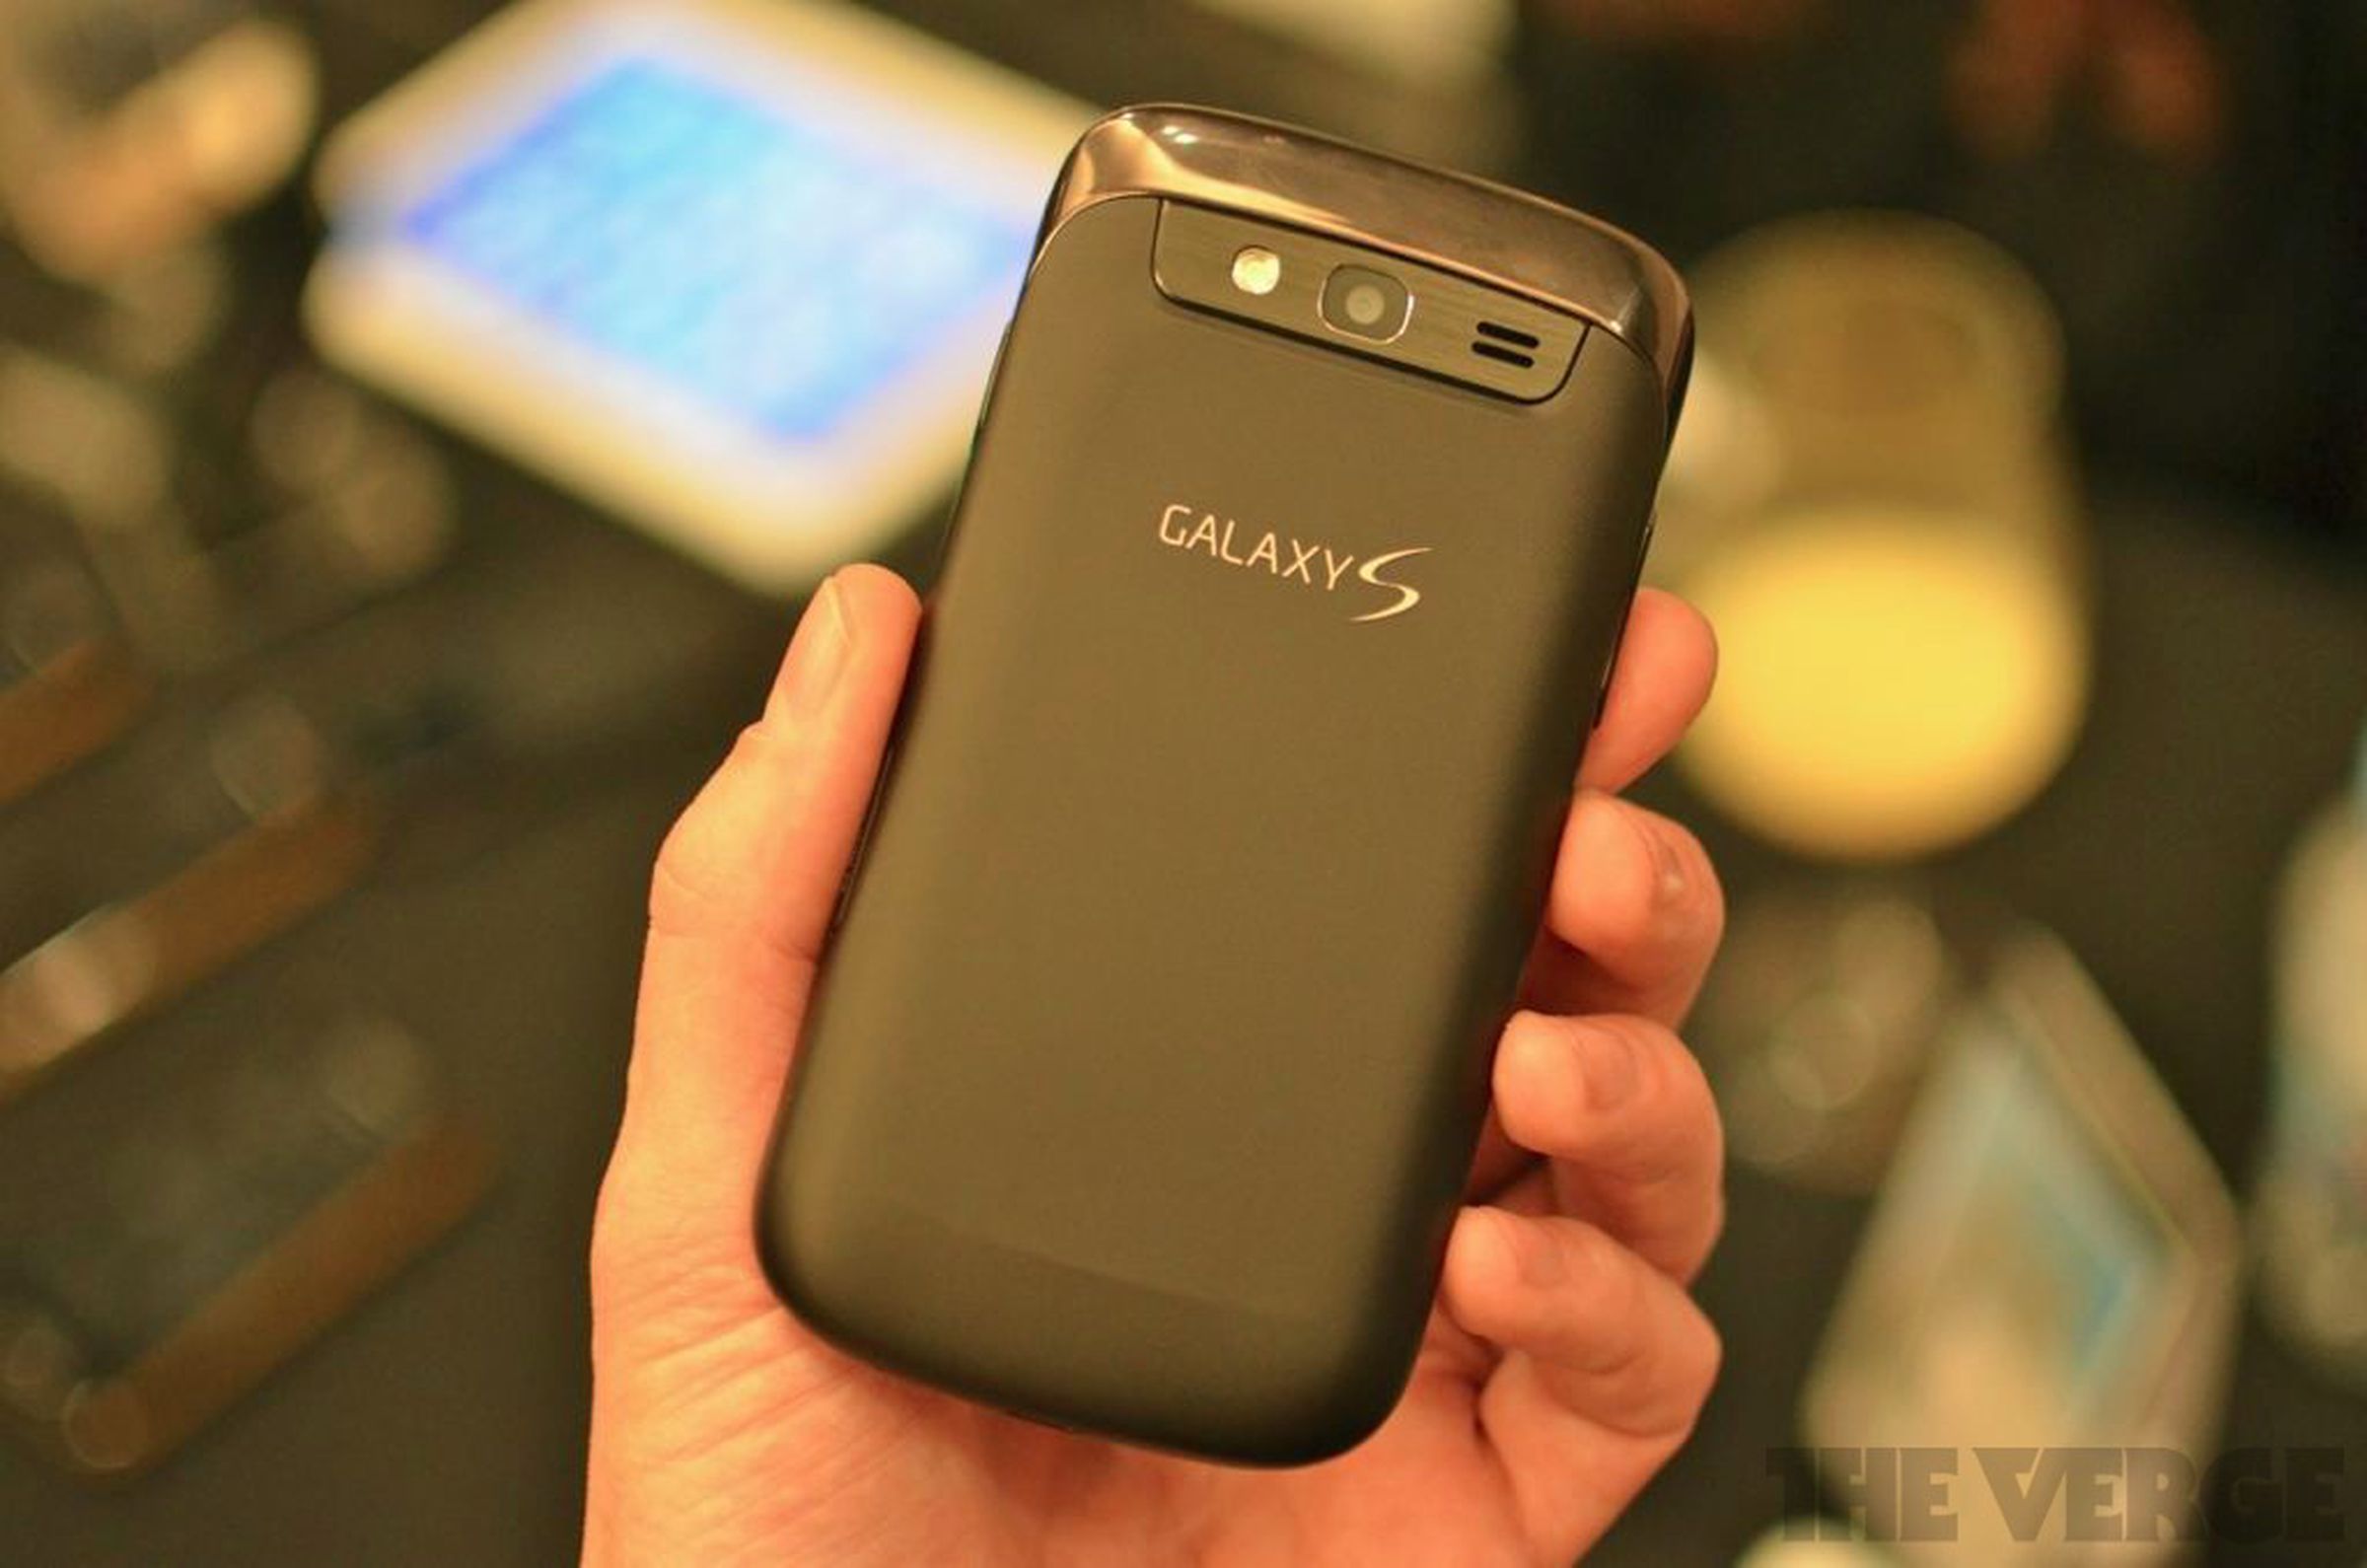 Galaxy S Blaze 4G hands-on photos